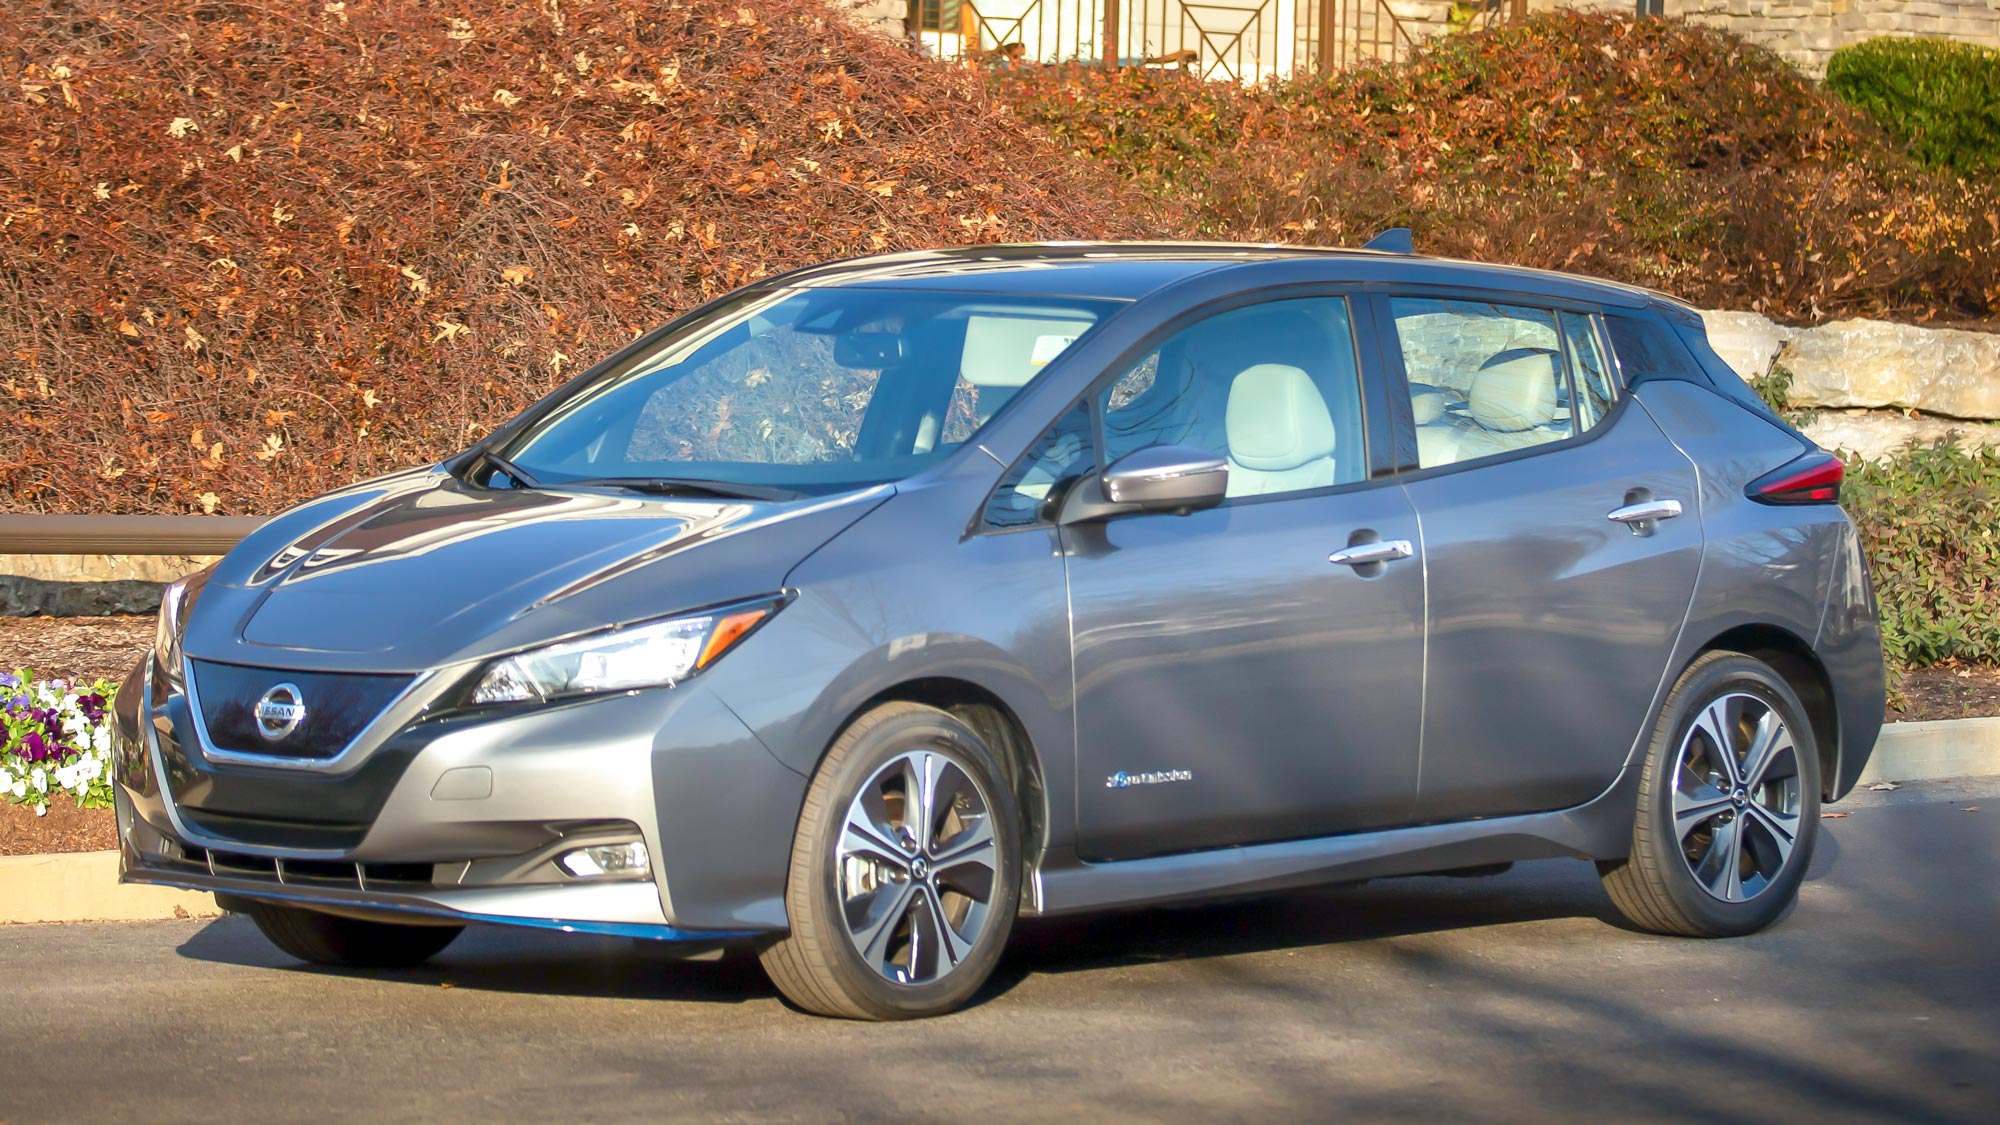 Nissan Leaf review: A great EV value | Tom's Guide